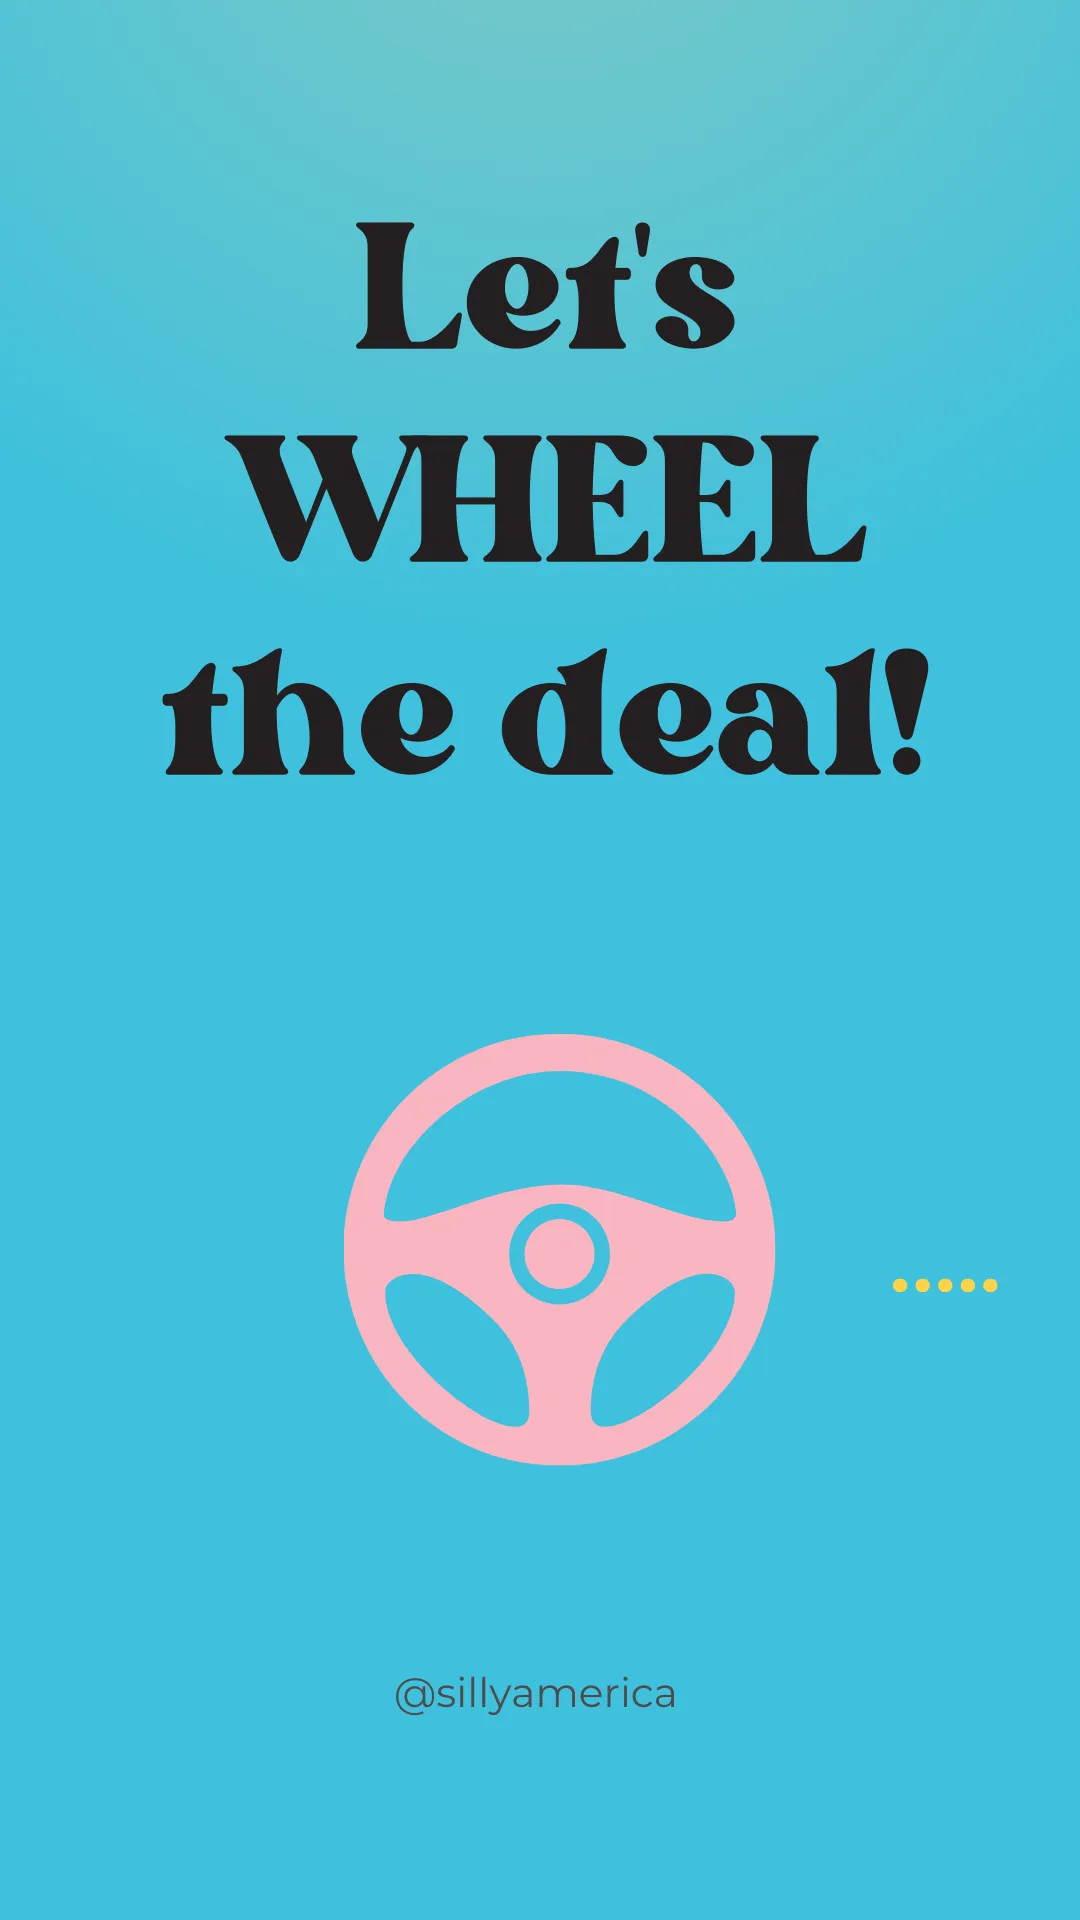 Let's WHEEL the deal! - Road Trip Puns